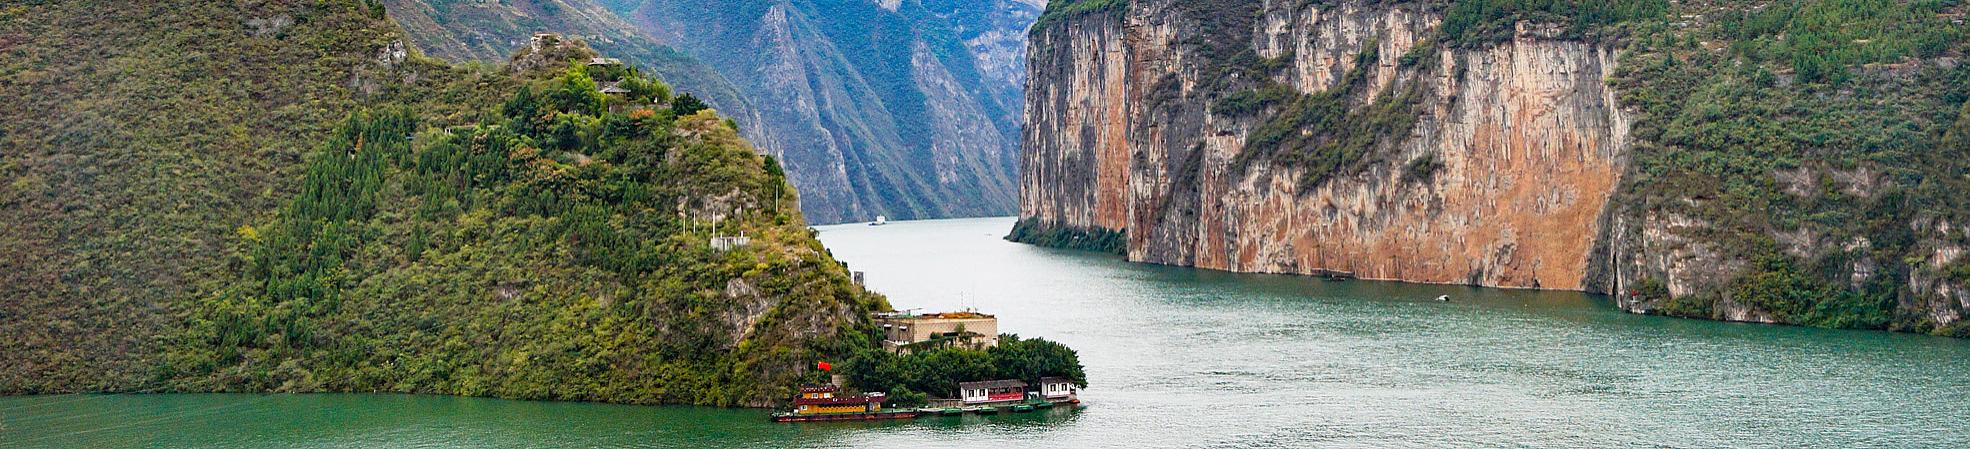 Three Gorges Dam - the Great Wall across Yangtze River 